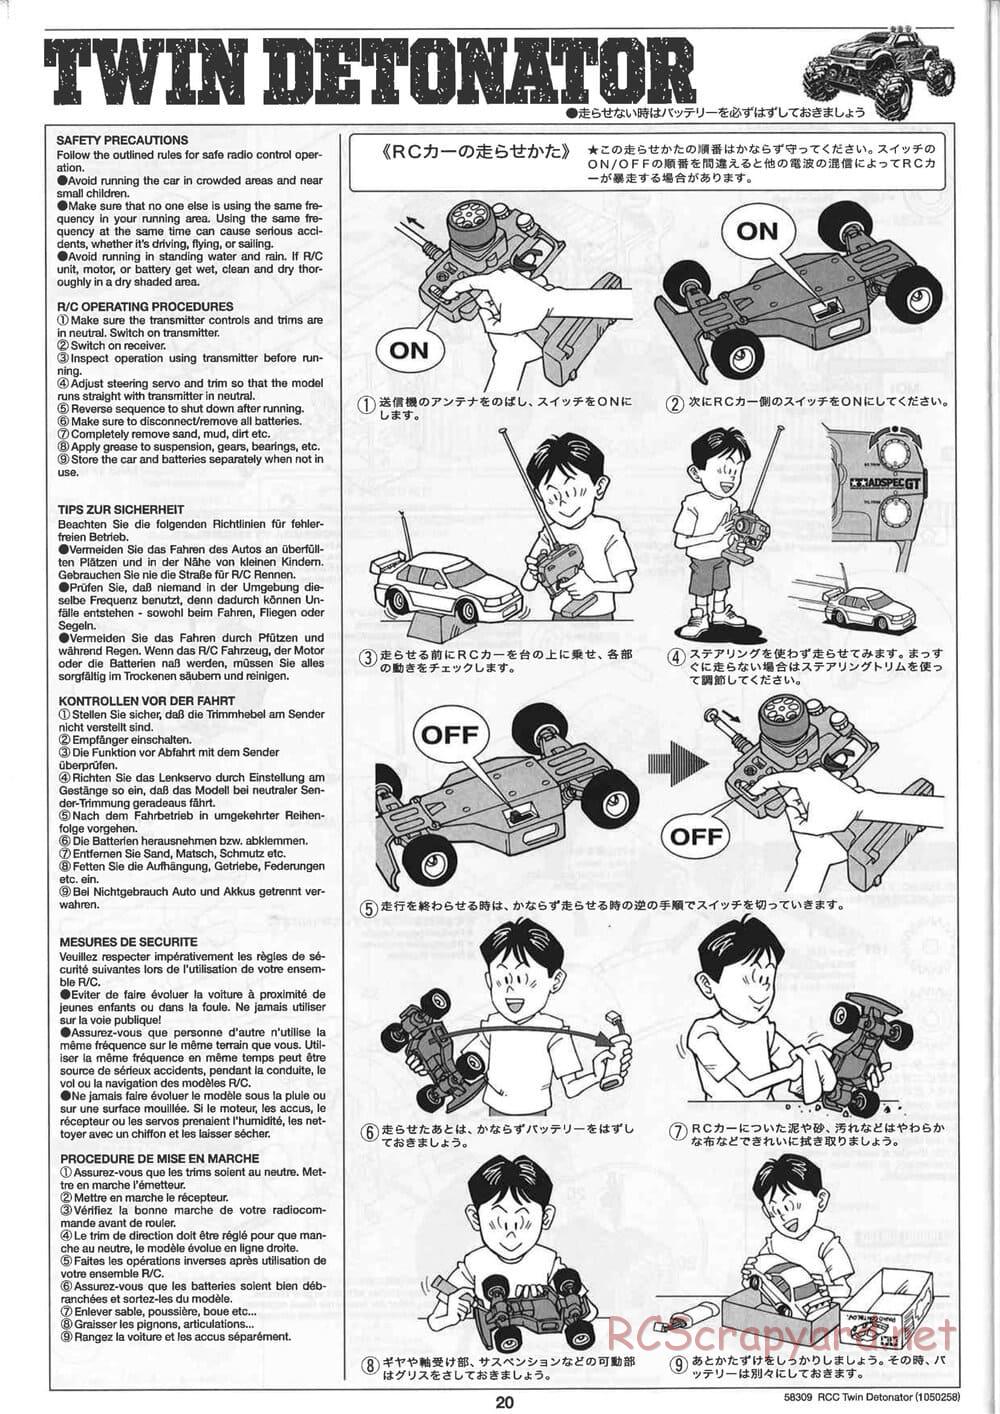 Tamiya - Twin Detonator - WR-01 Chassis - Manual - Page 20